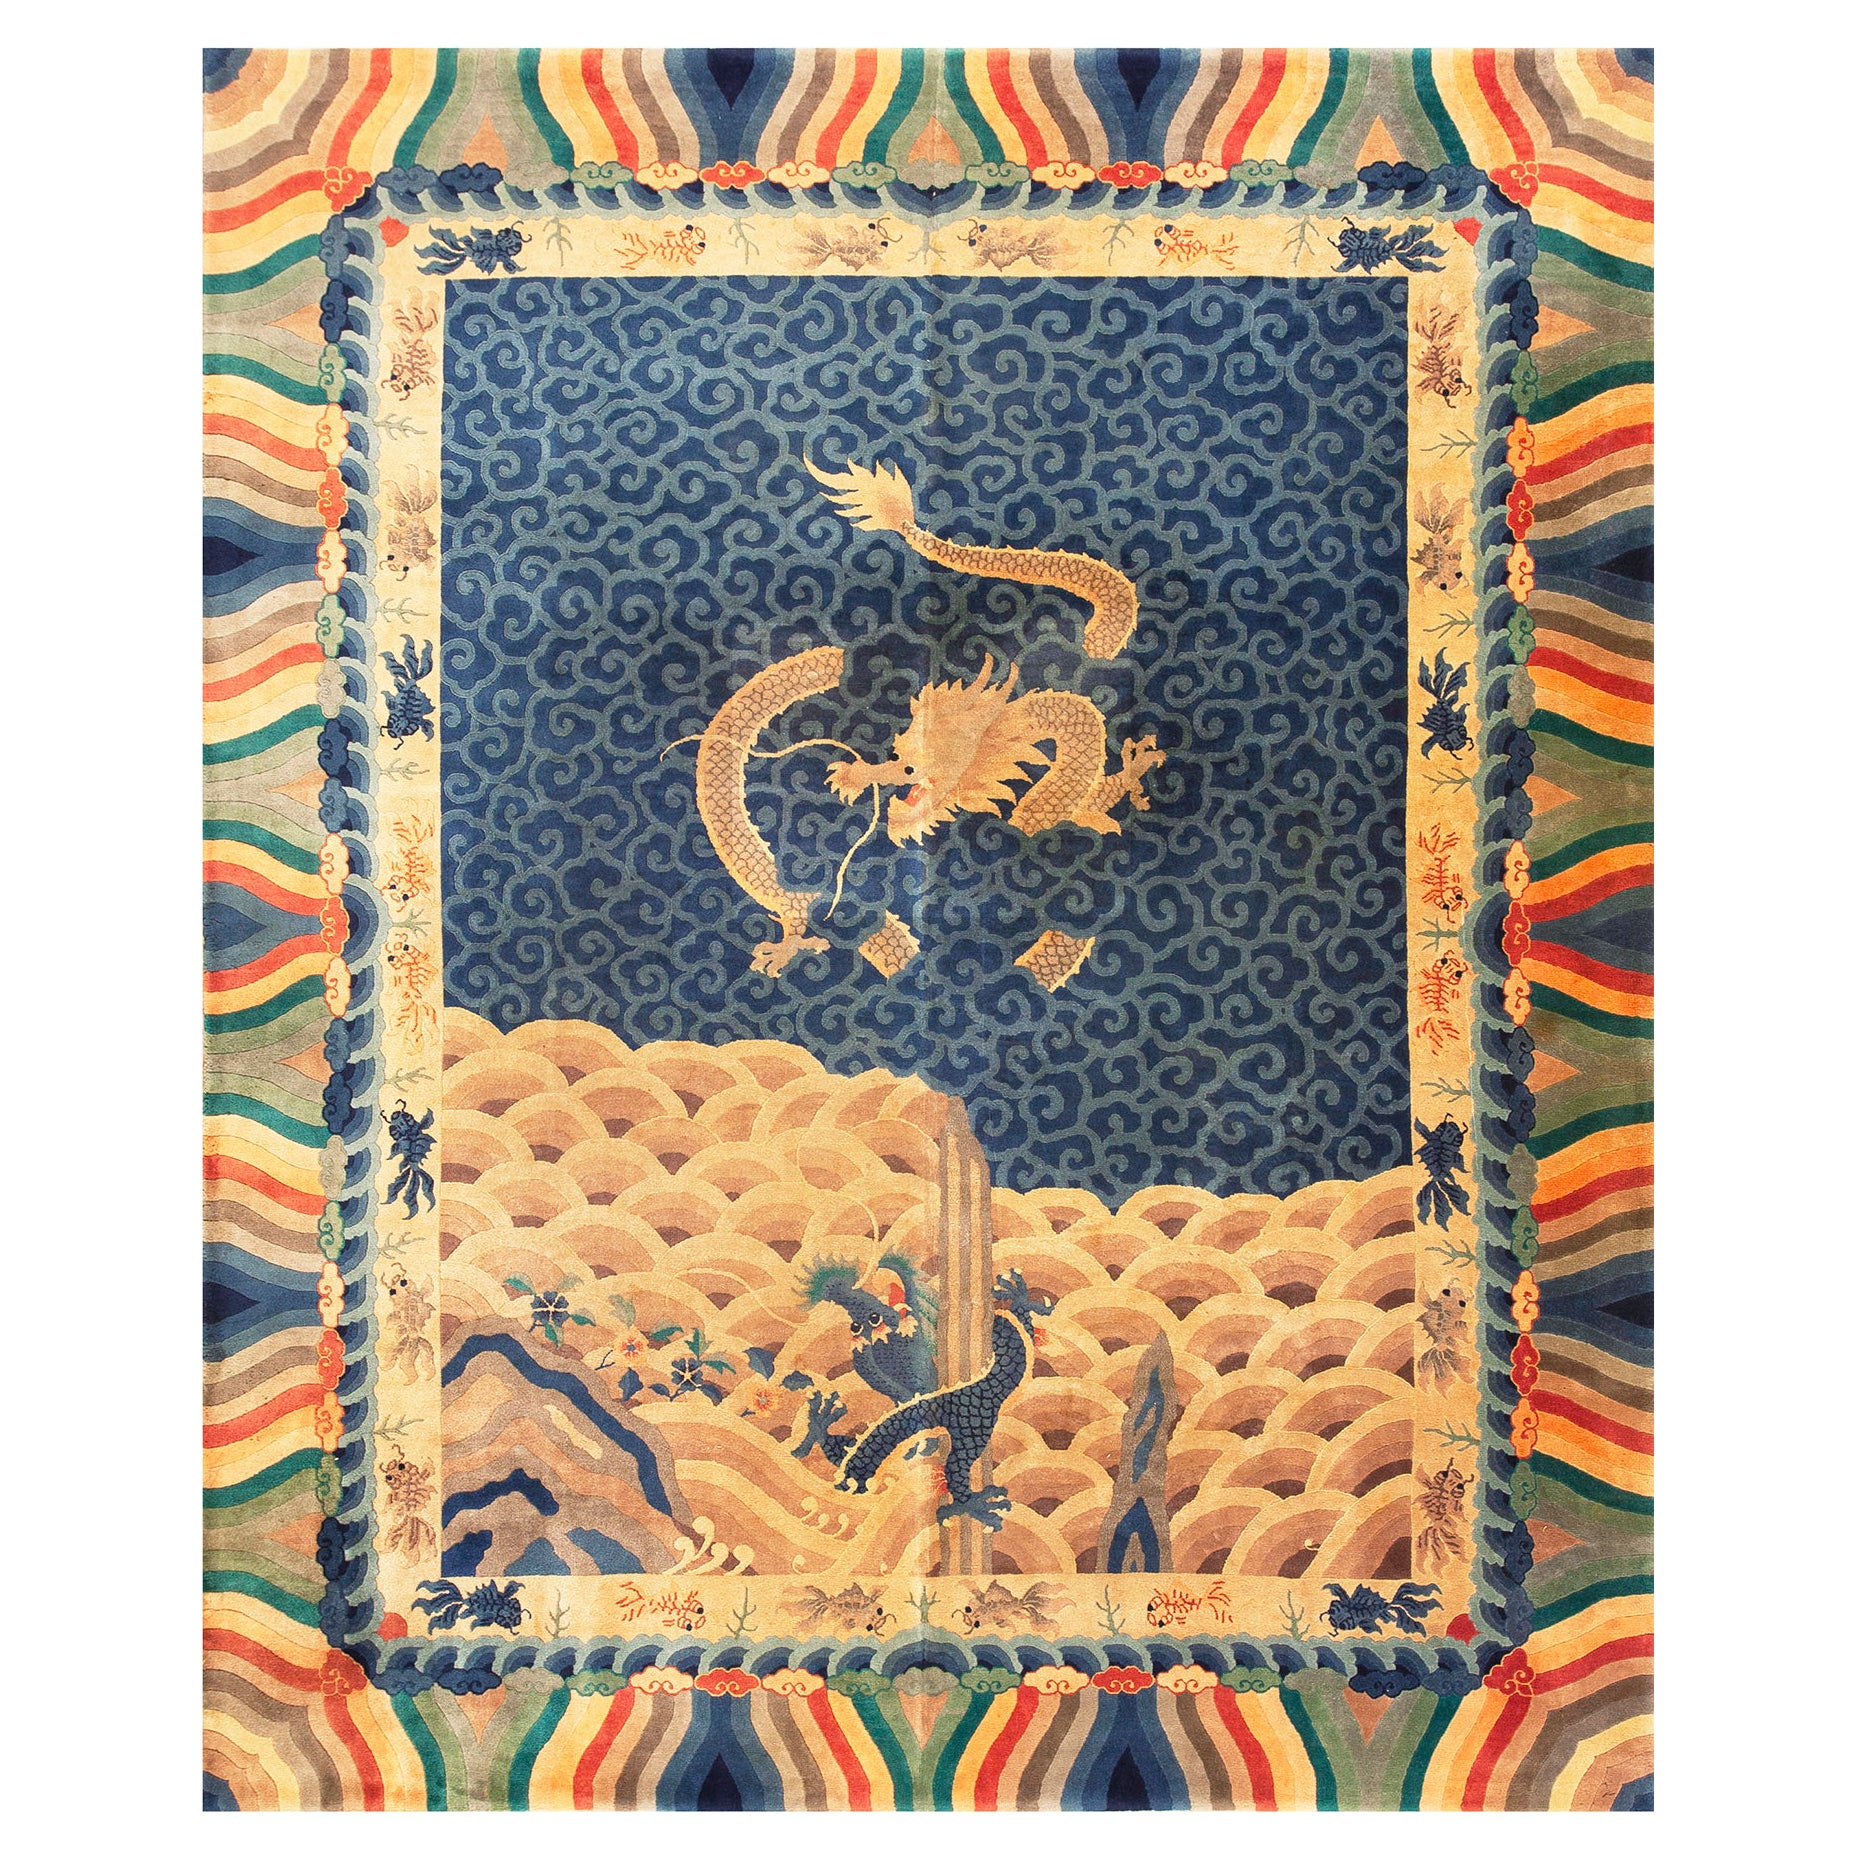 1920s Chinese Art Deco Carpet By Nichols Workshop (8' 6" x 10' 6'' - 260 x 320) For Sale